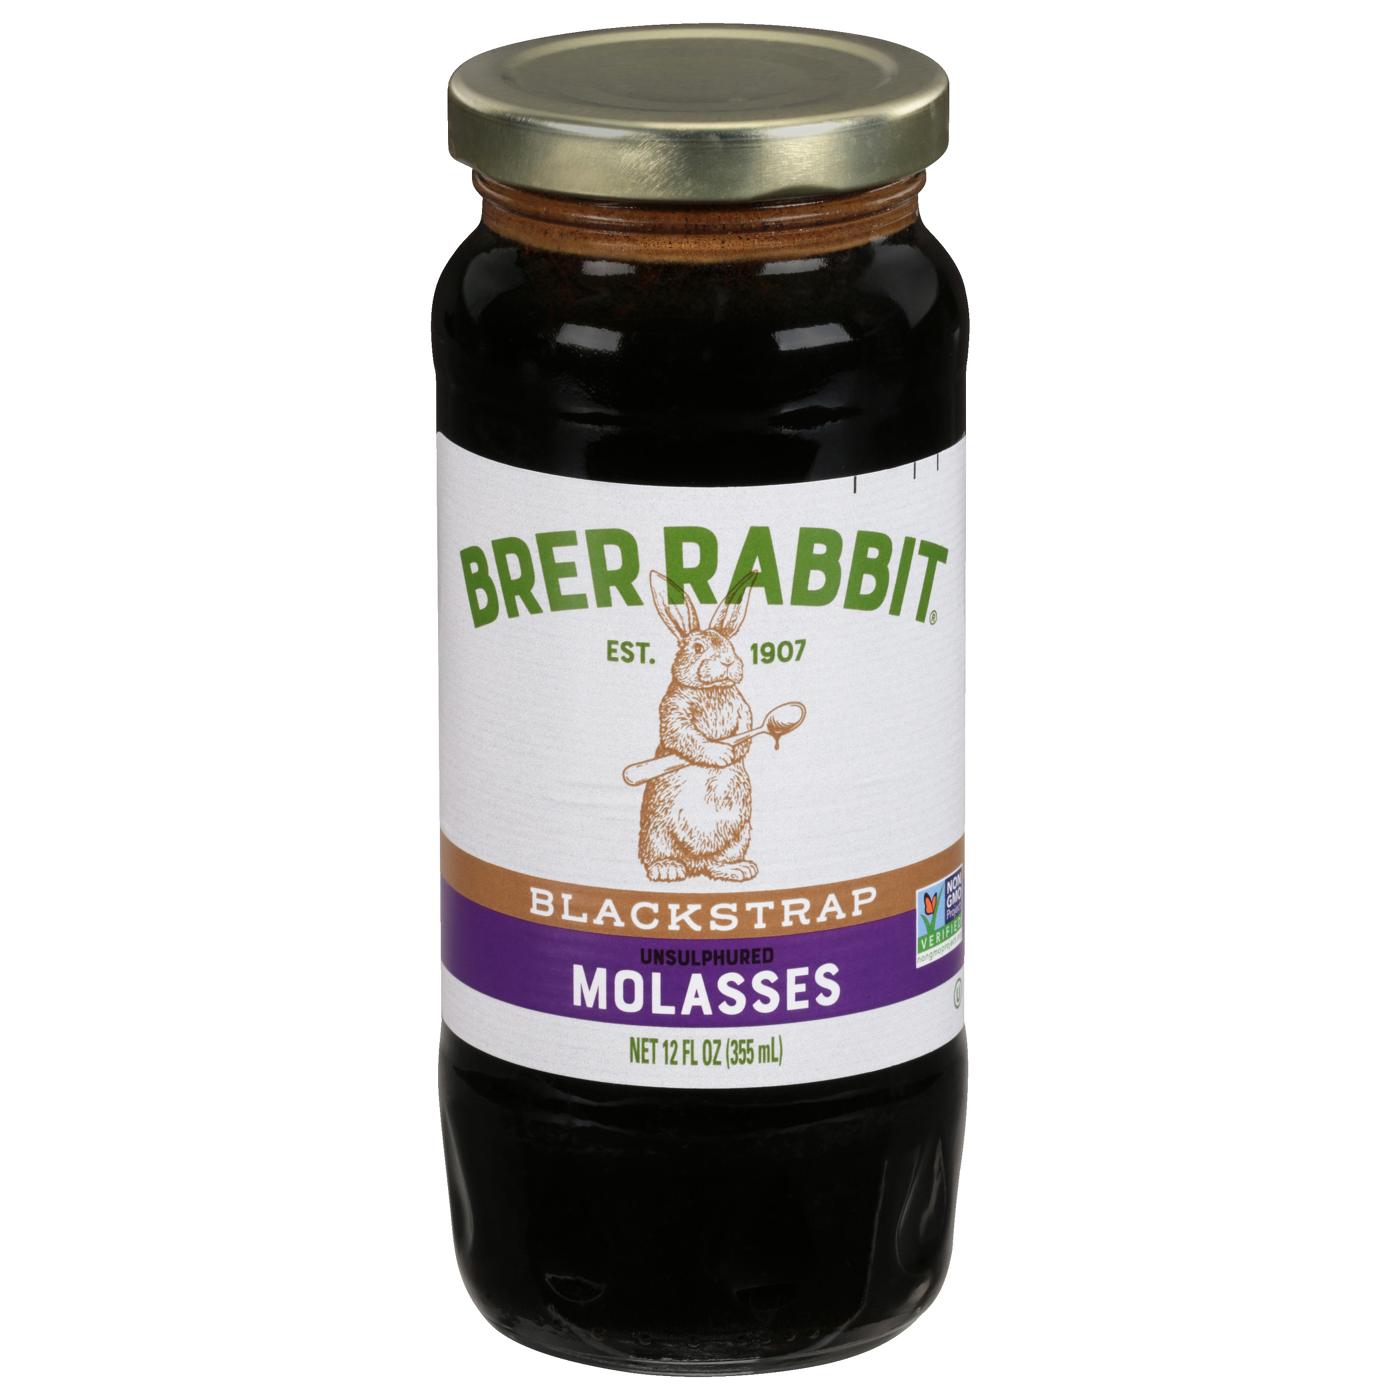 Brer Rabbit Molasses Blackstrap; image 1 of 3